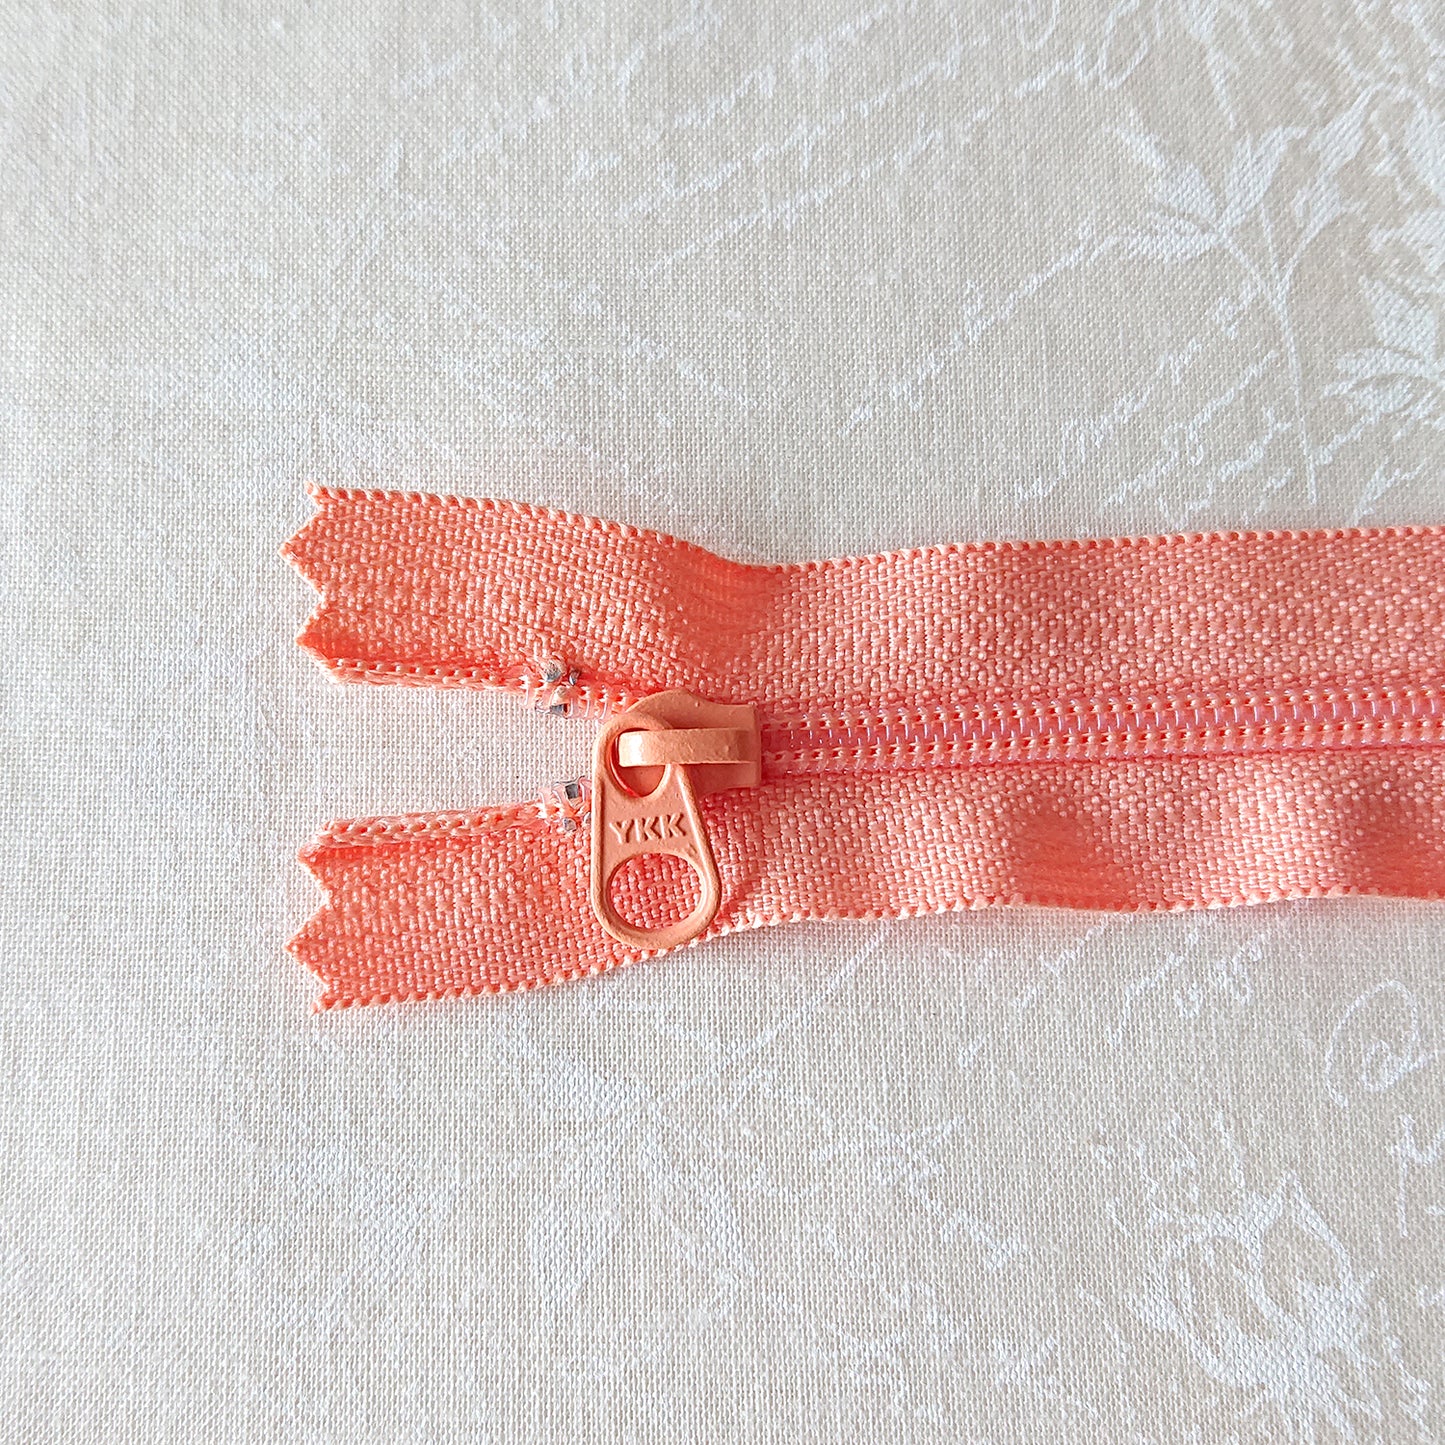 YKK Candy Color Zipper --Orange(20cm/8in)